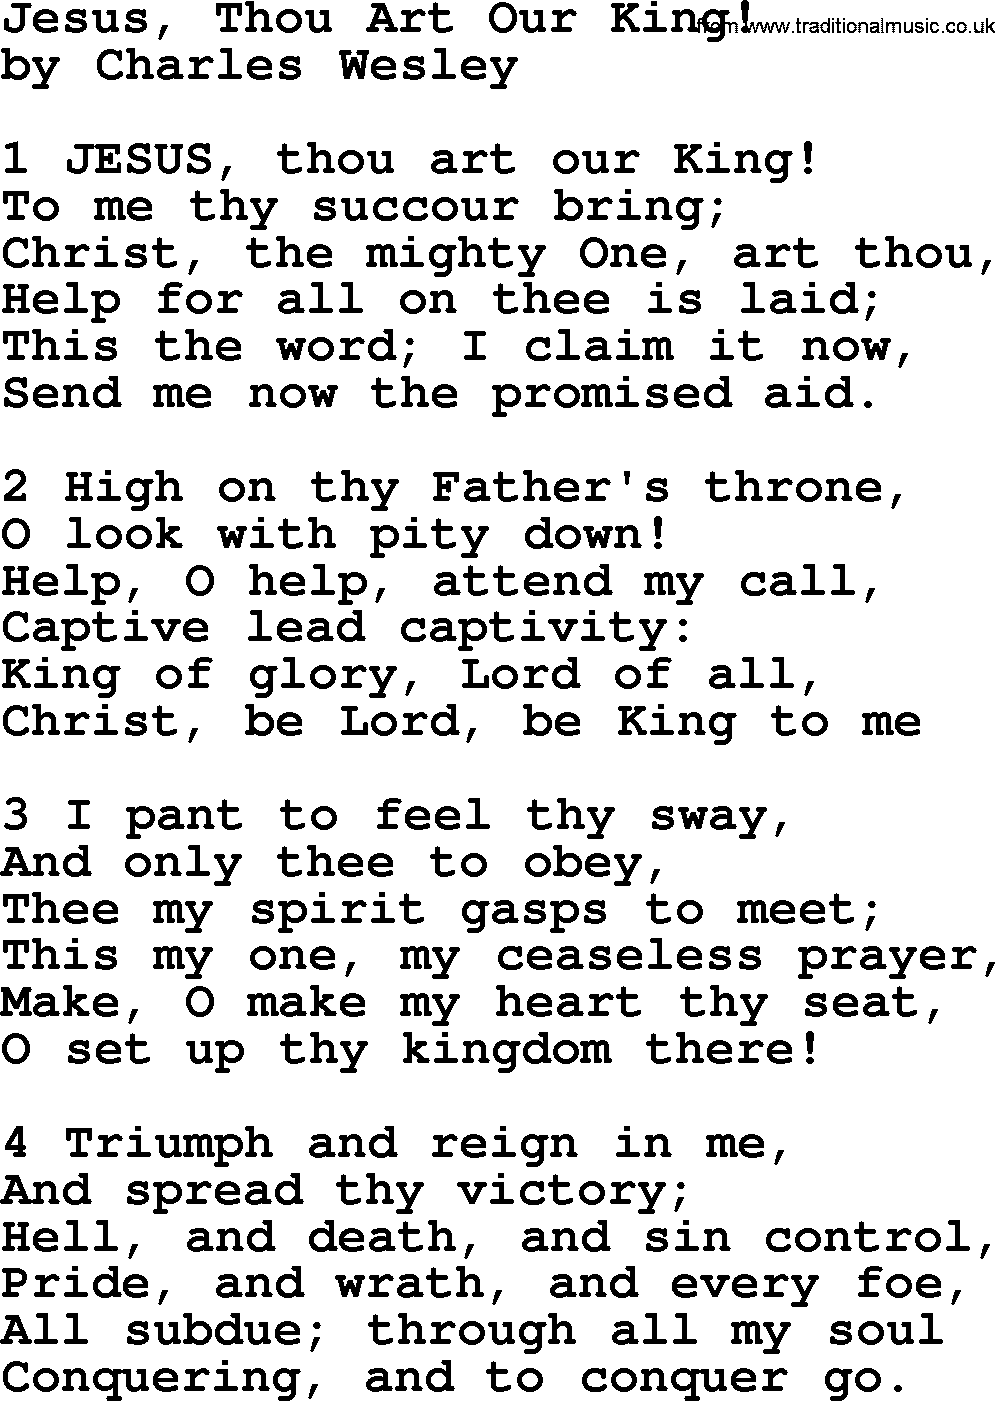 Charles Wesley hymn: Jesus, Thou Art Our King!, lyrics